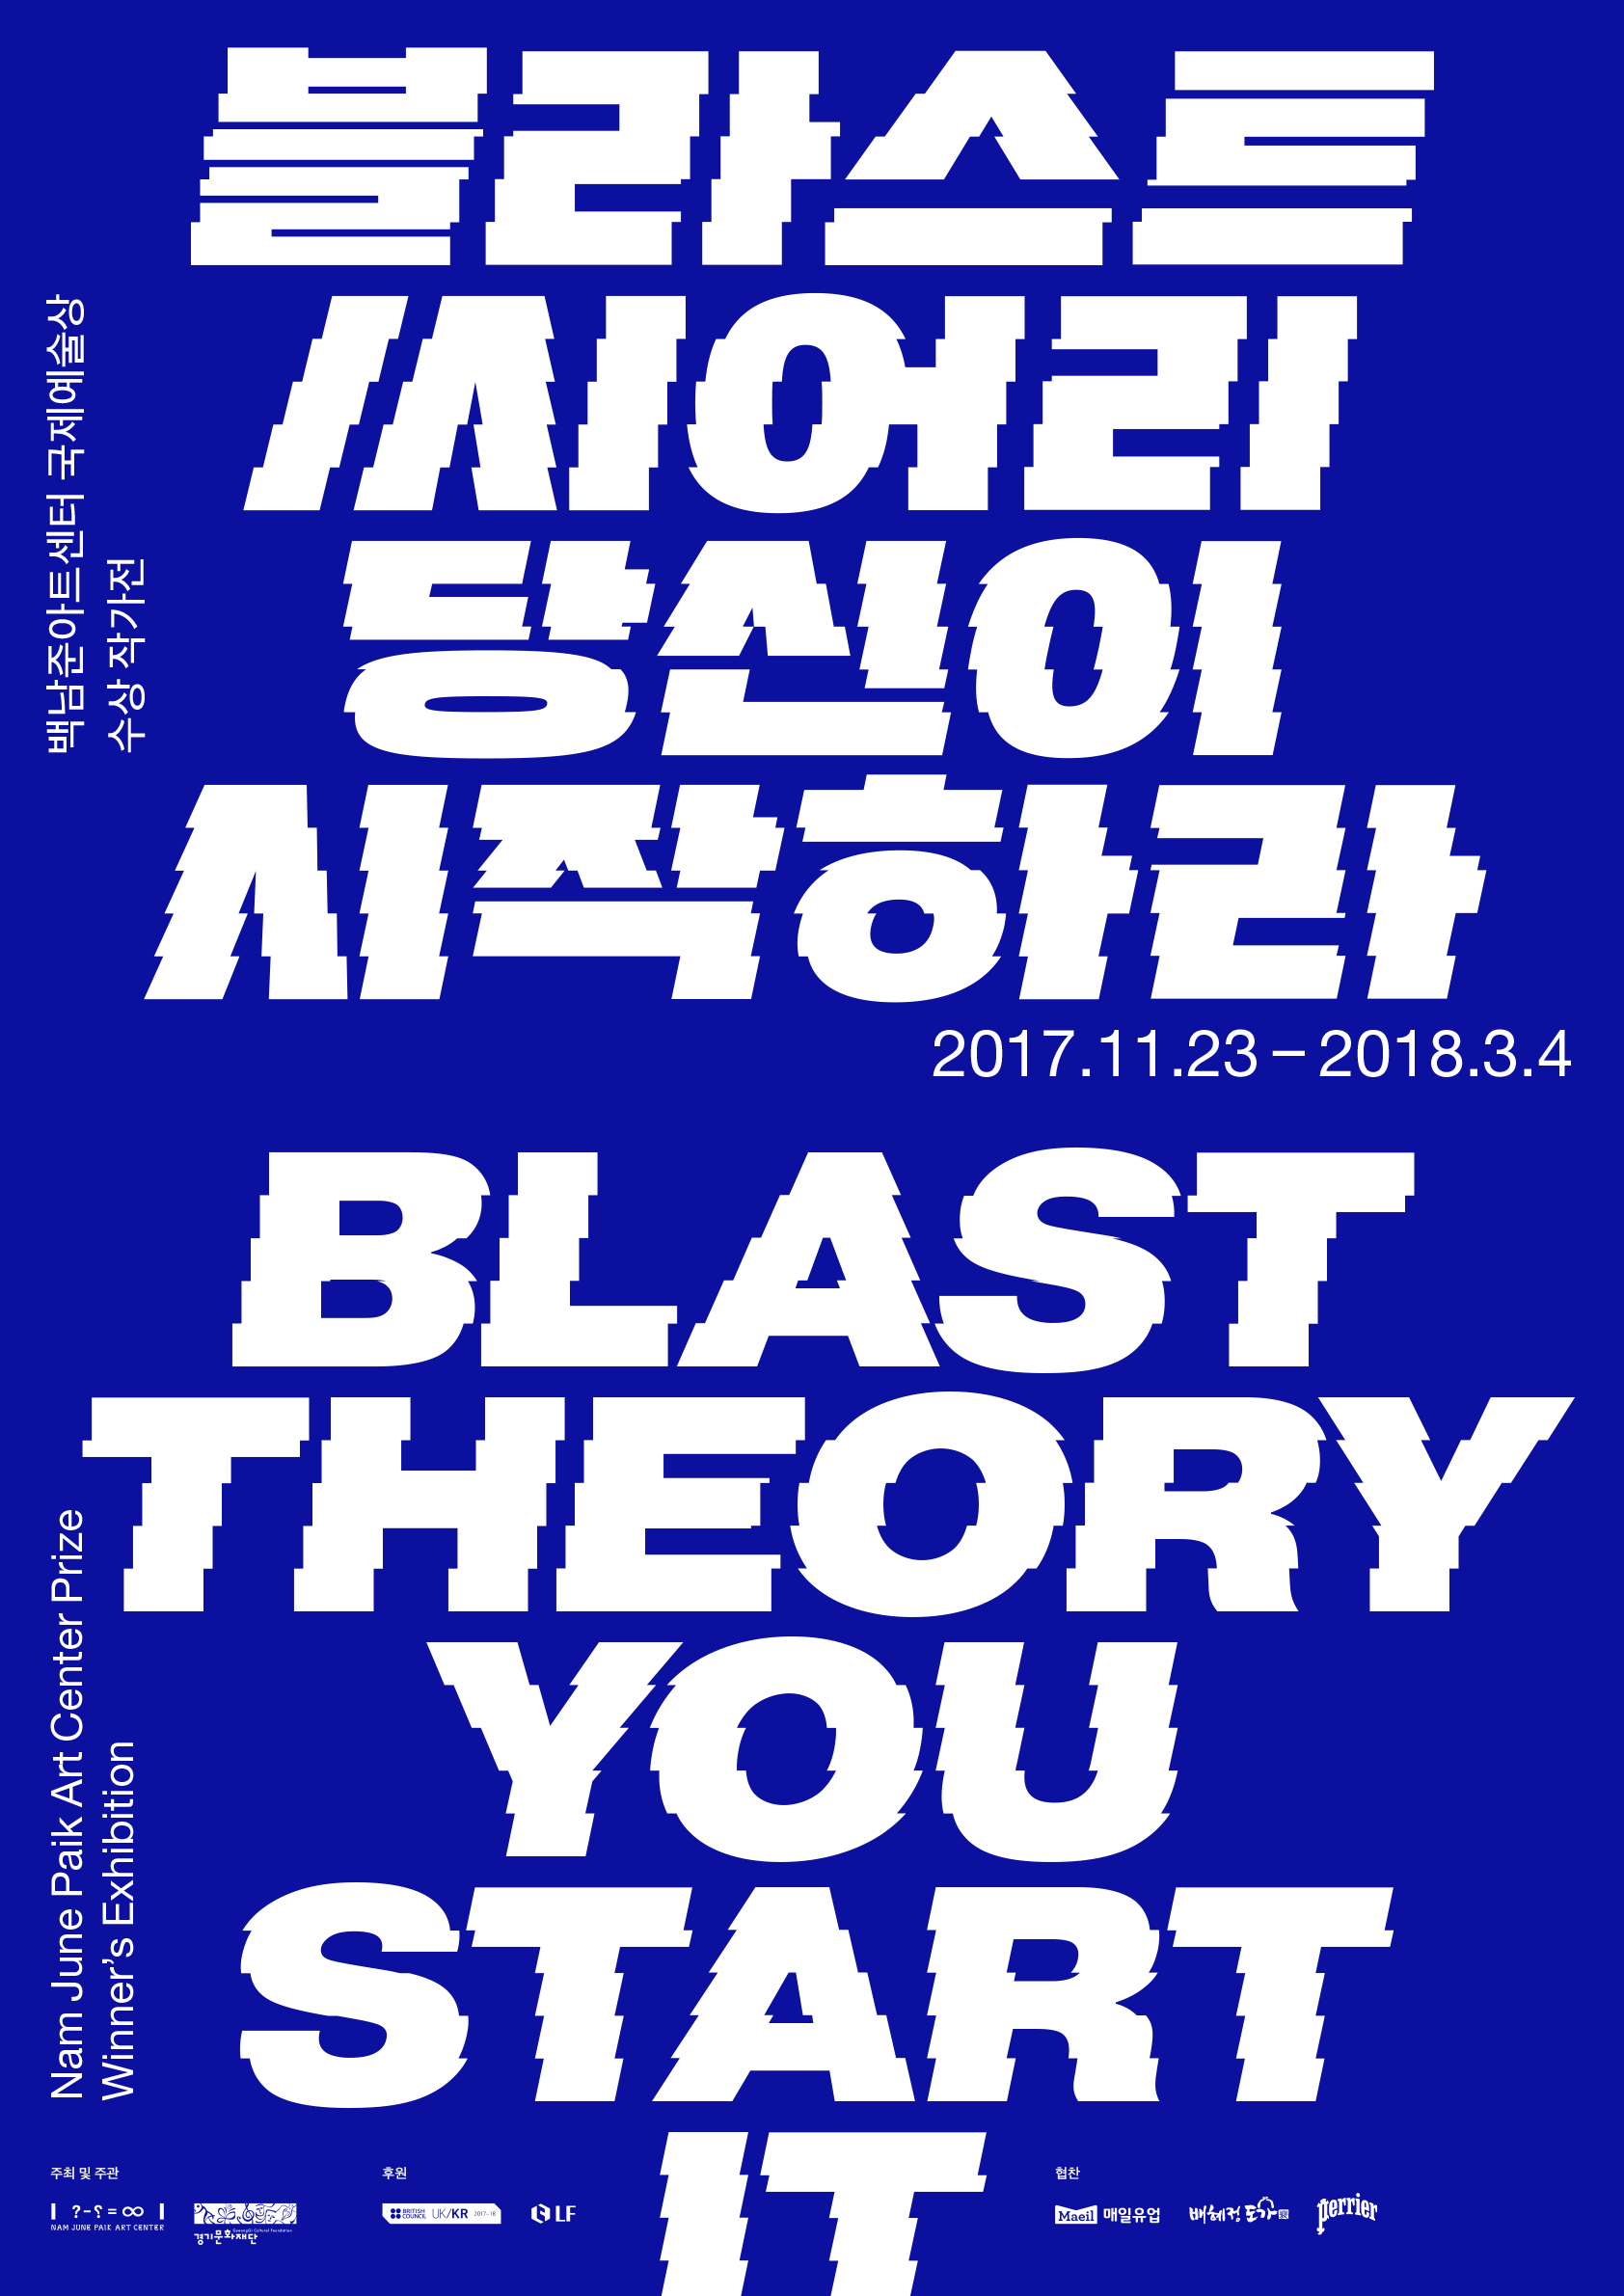 Blast-Theory-poster-offset-print